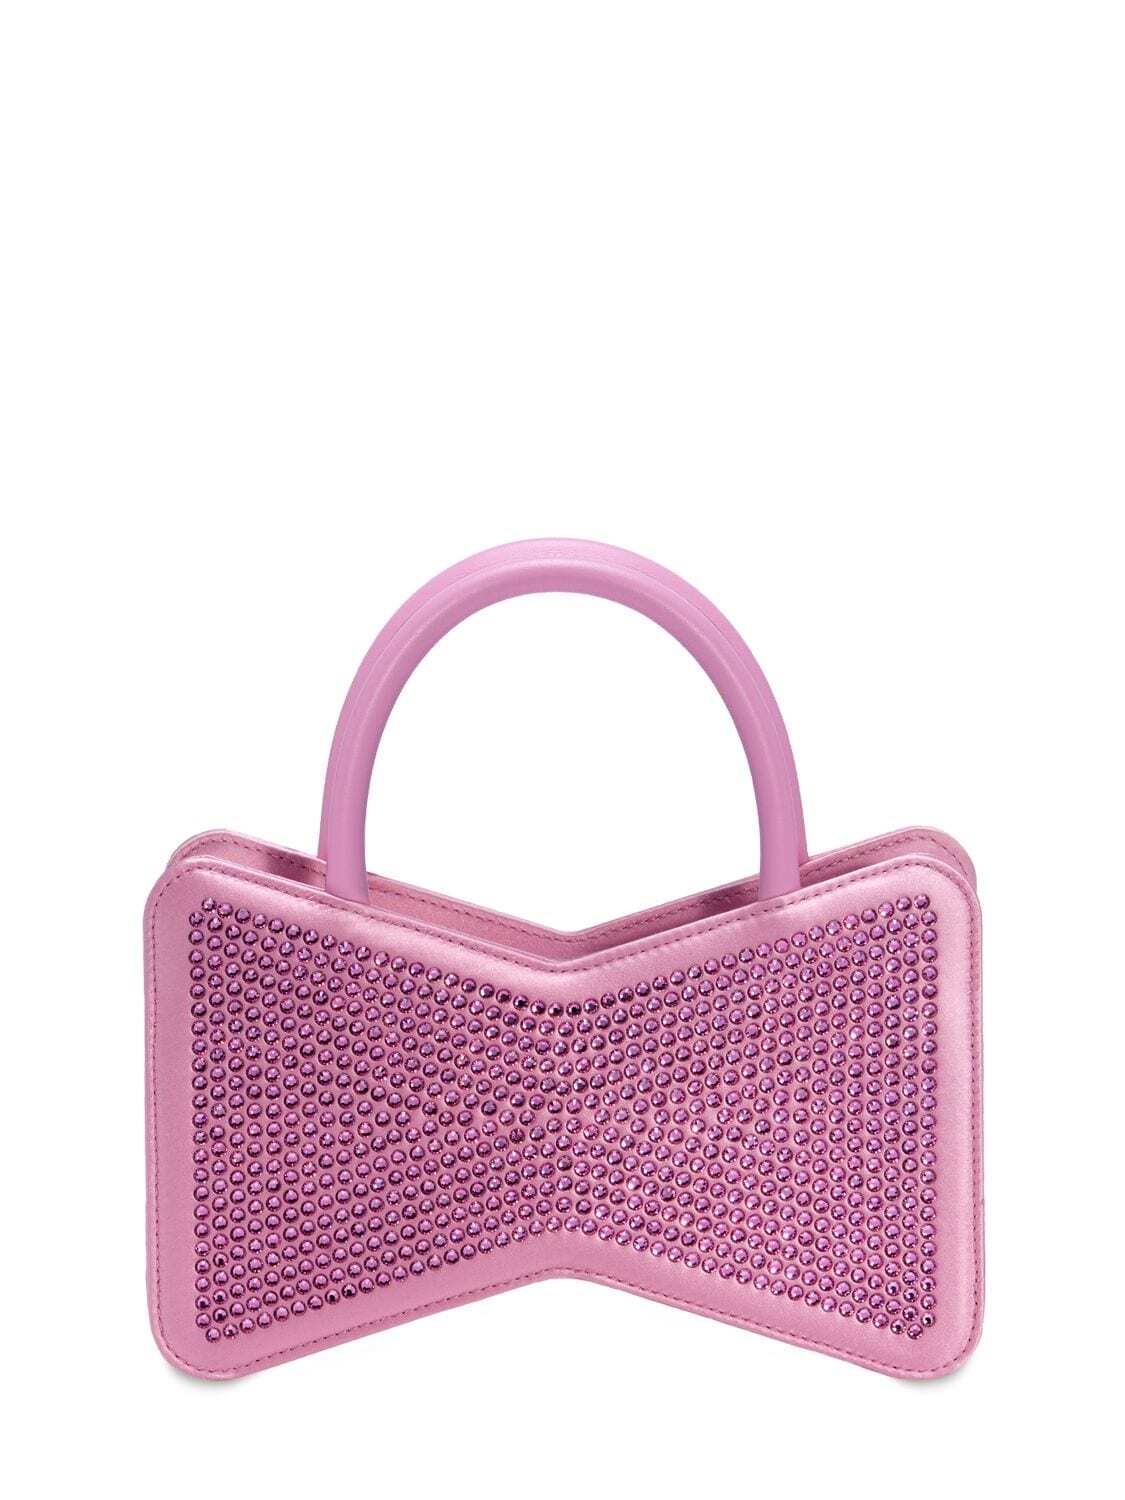 MACH & MACH Mini Bow Shape Crystallized Satin Bag in pink